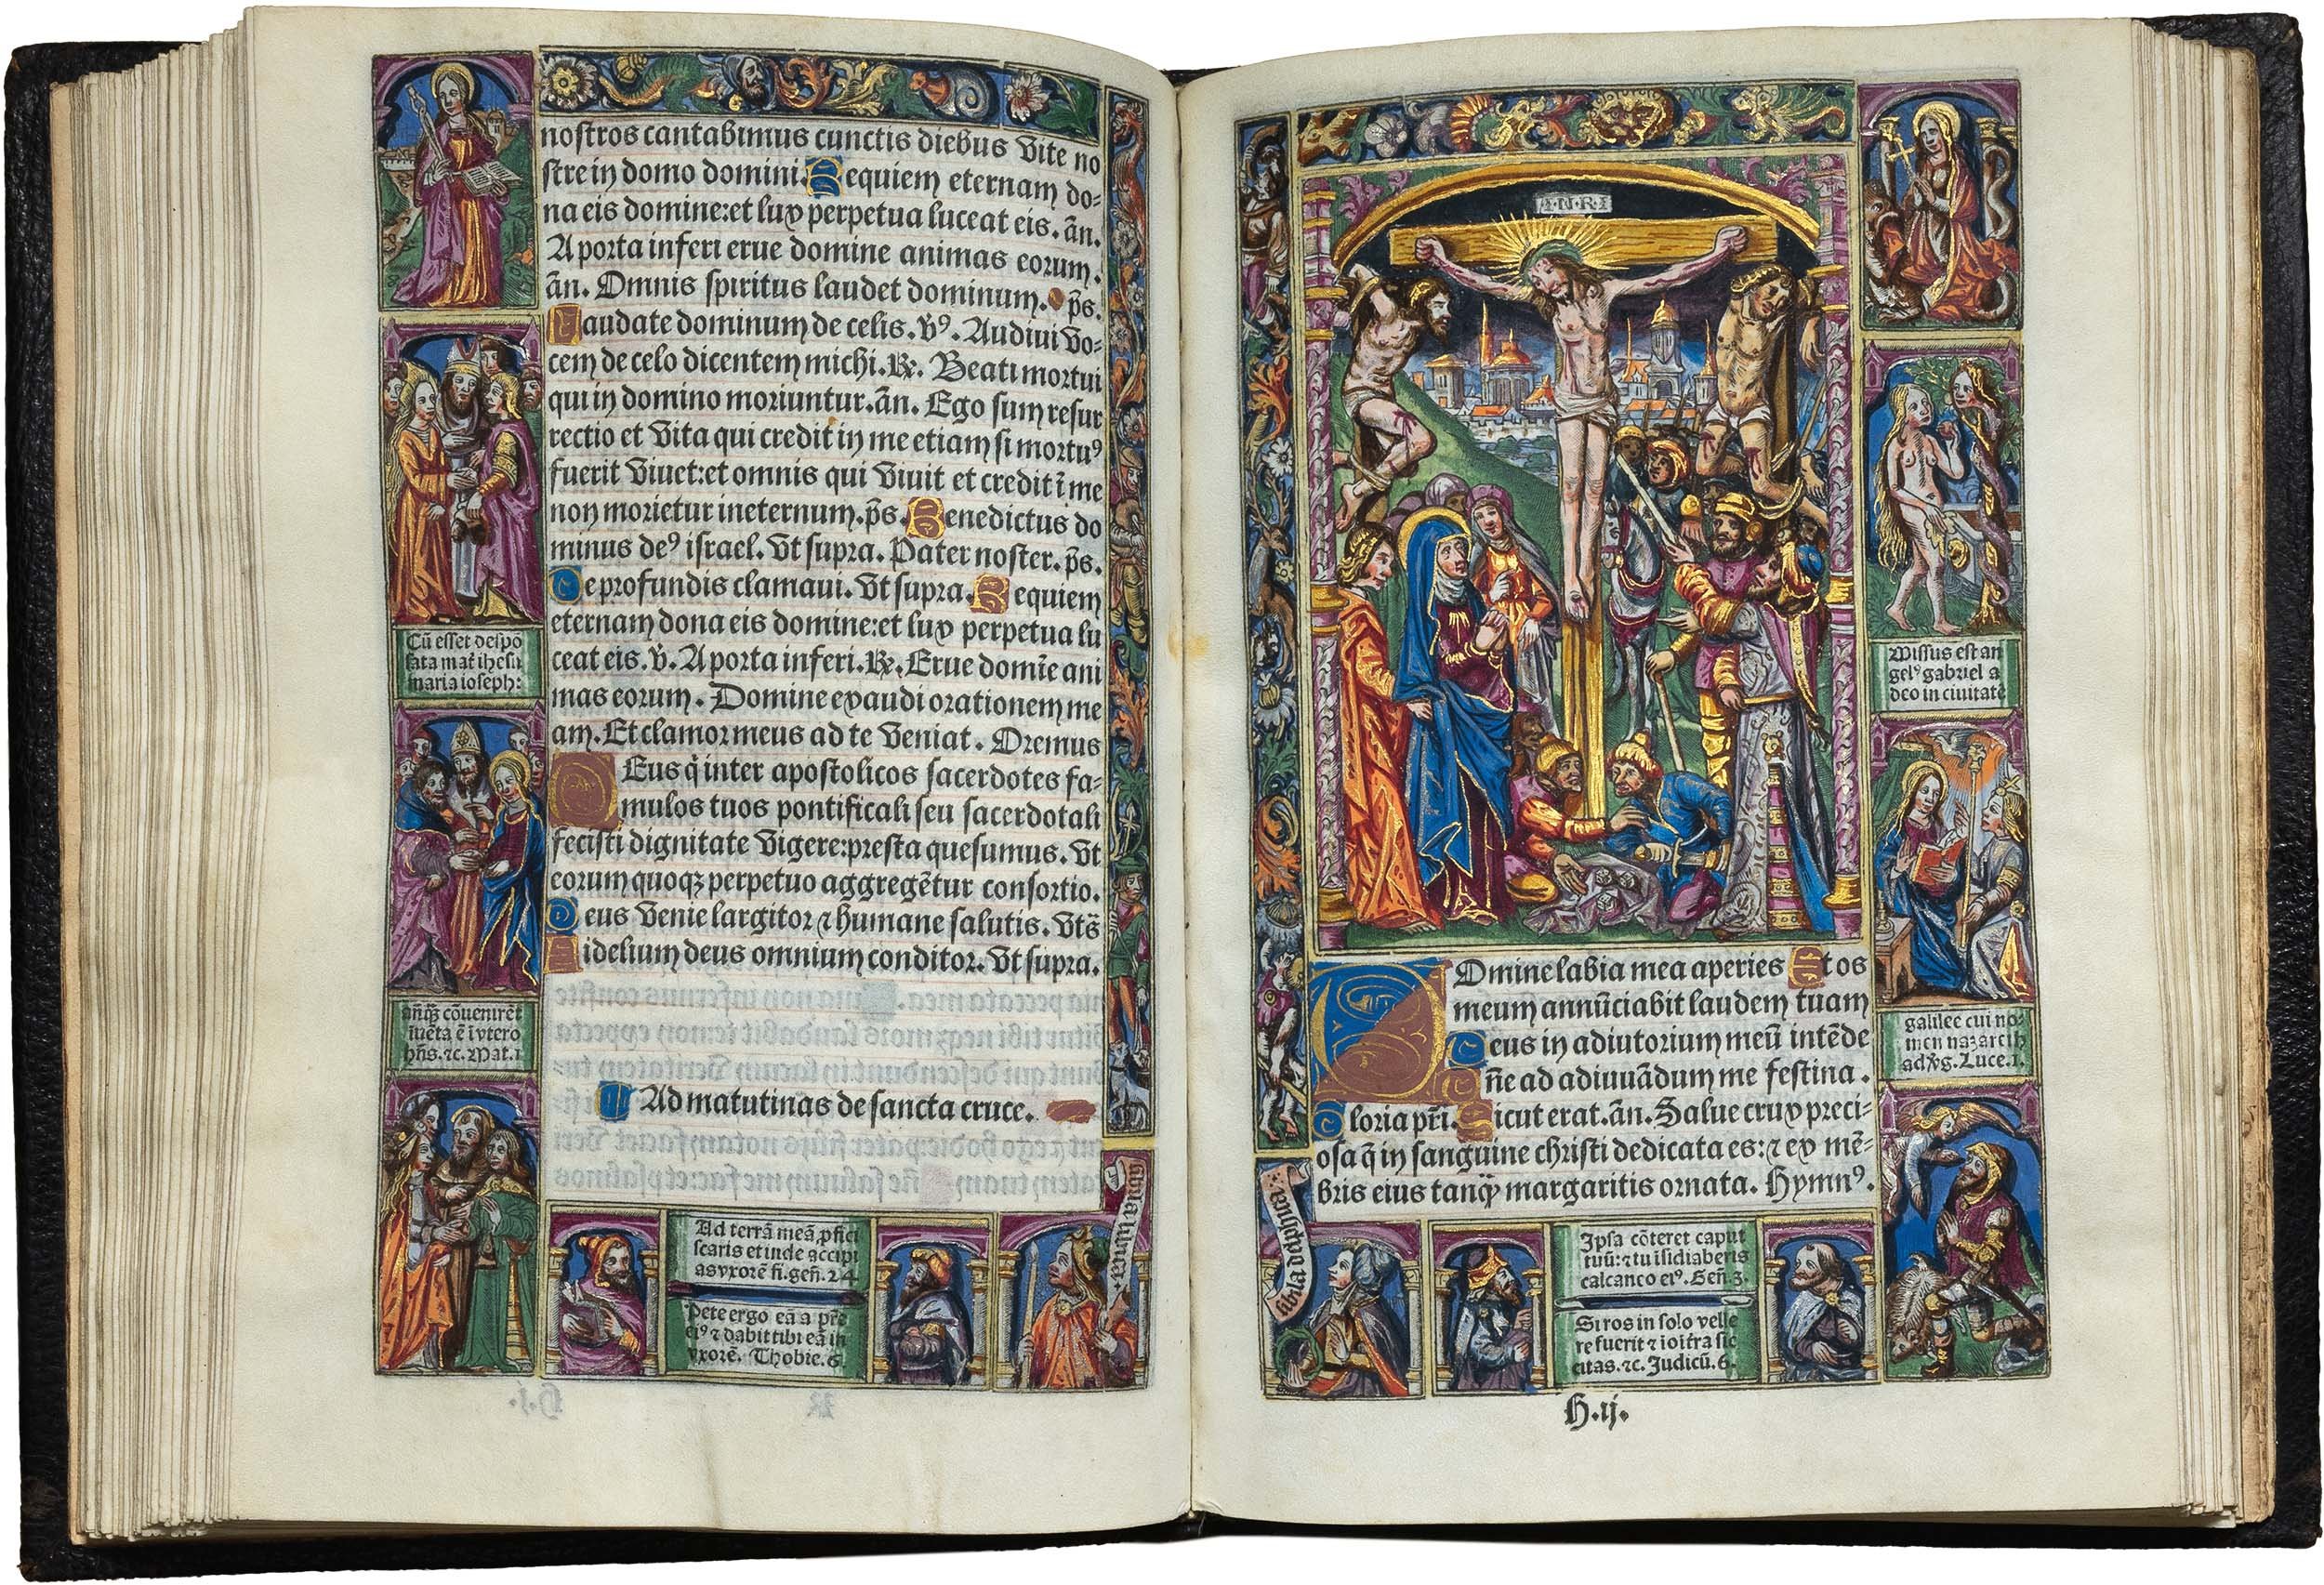 Printed-Book-of-Hours-10-january-1503-horae-bmv-kerver-remacle-illuminated-vellum-copy-schönborn-buchheim-60.jpg